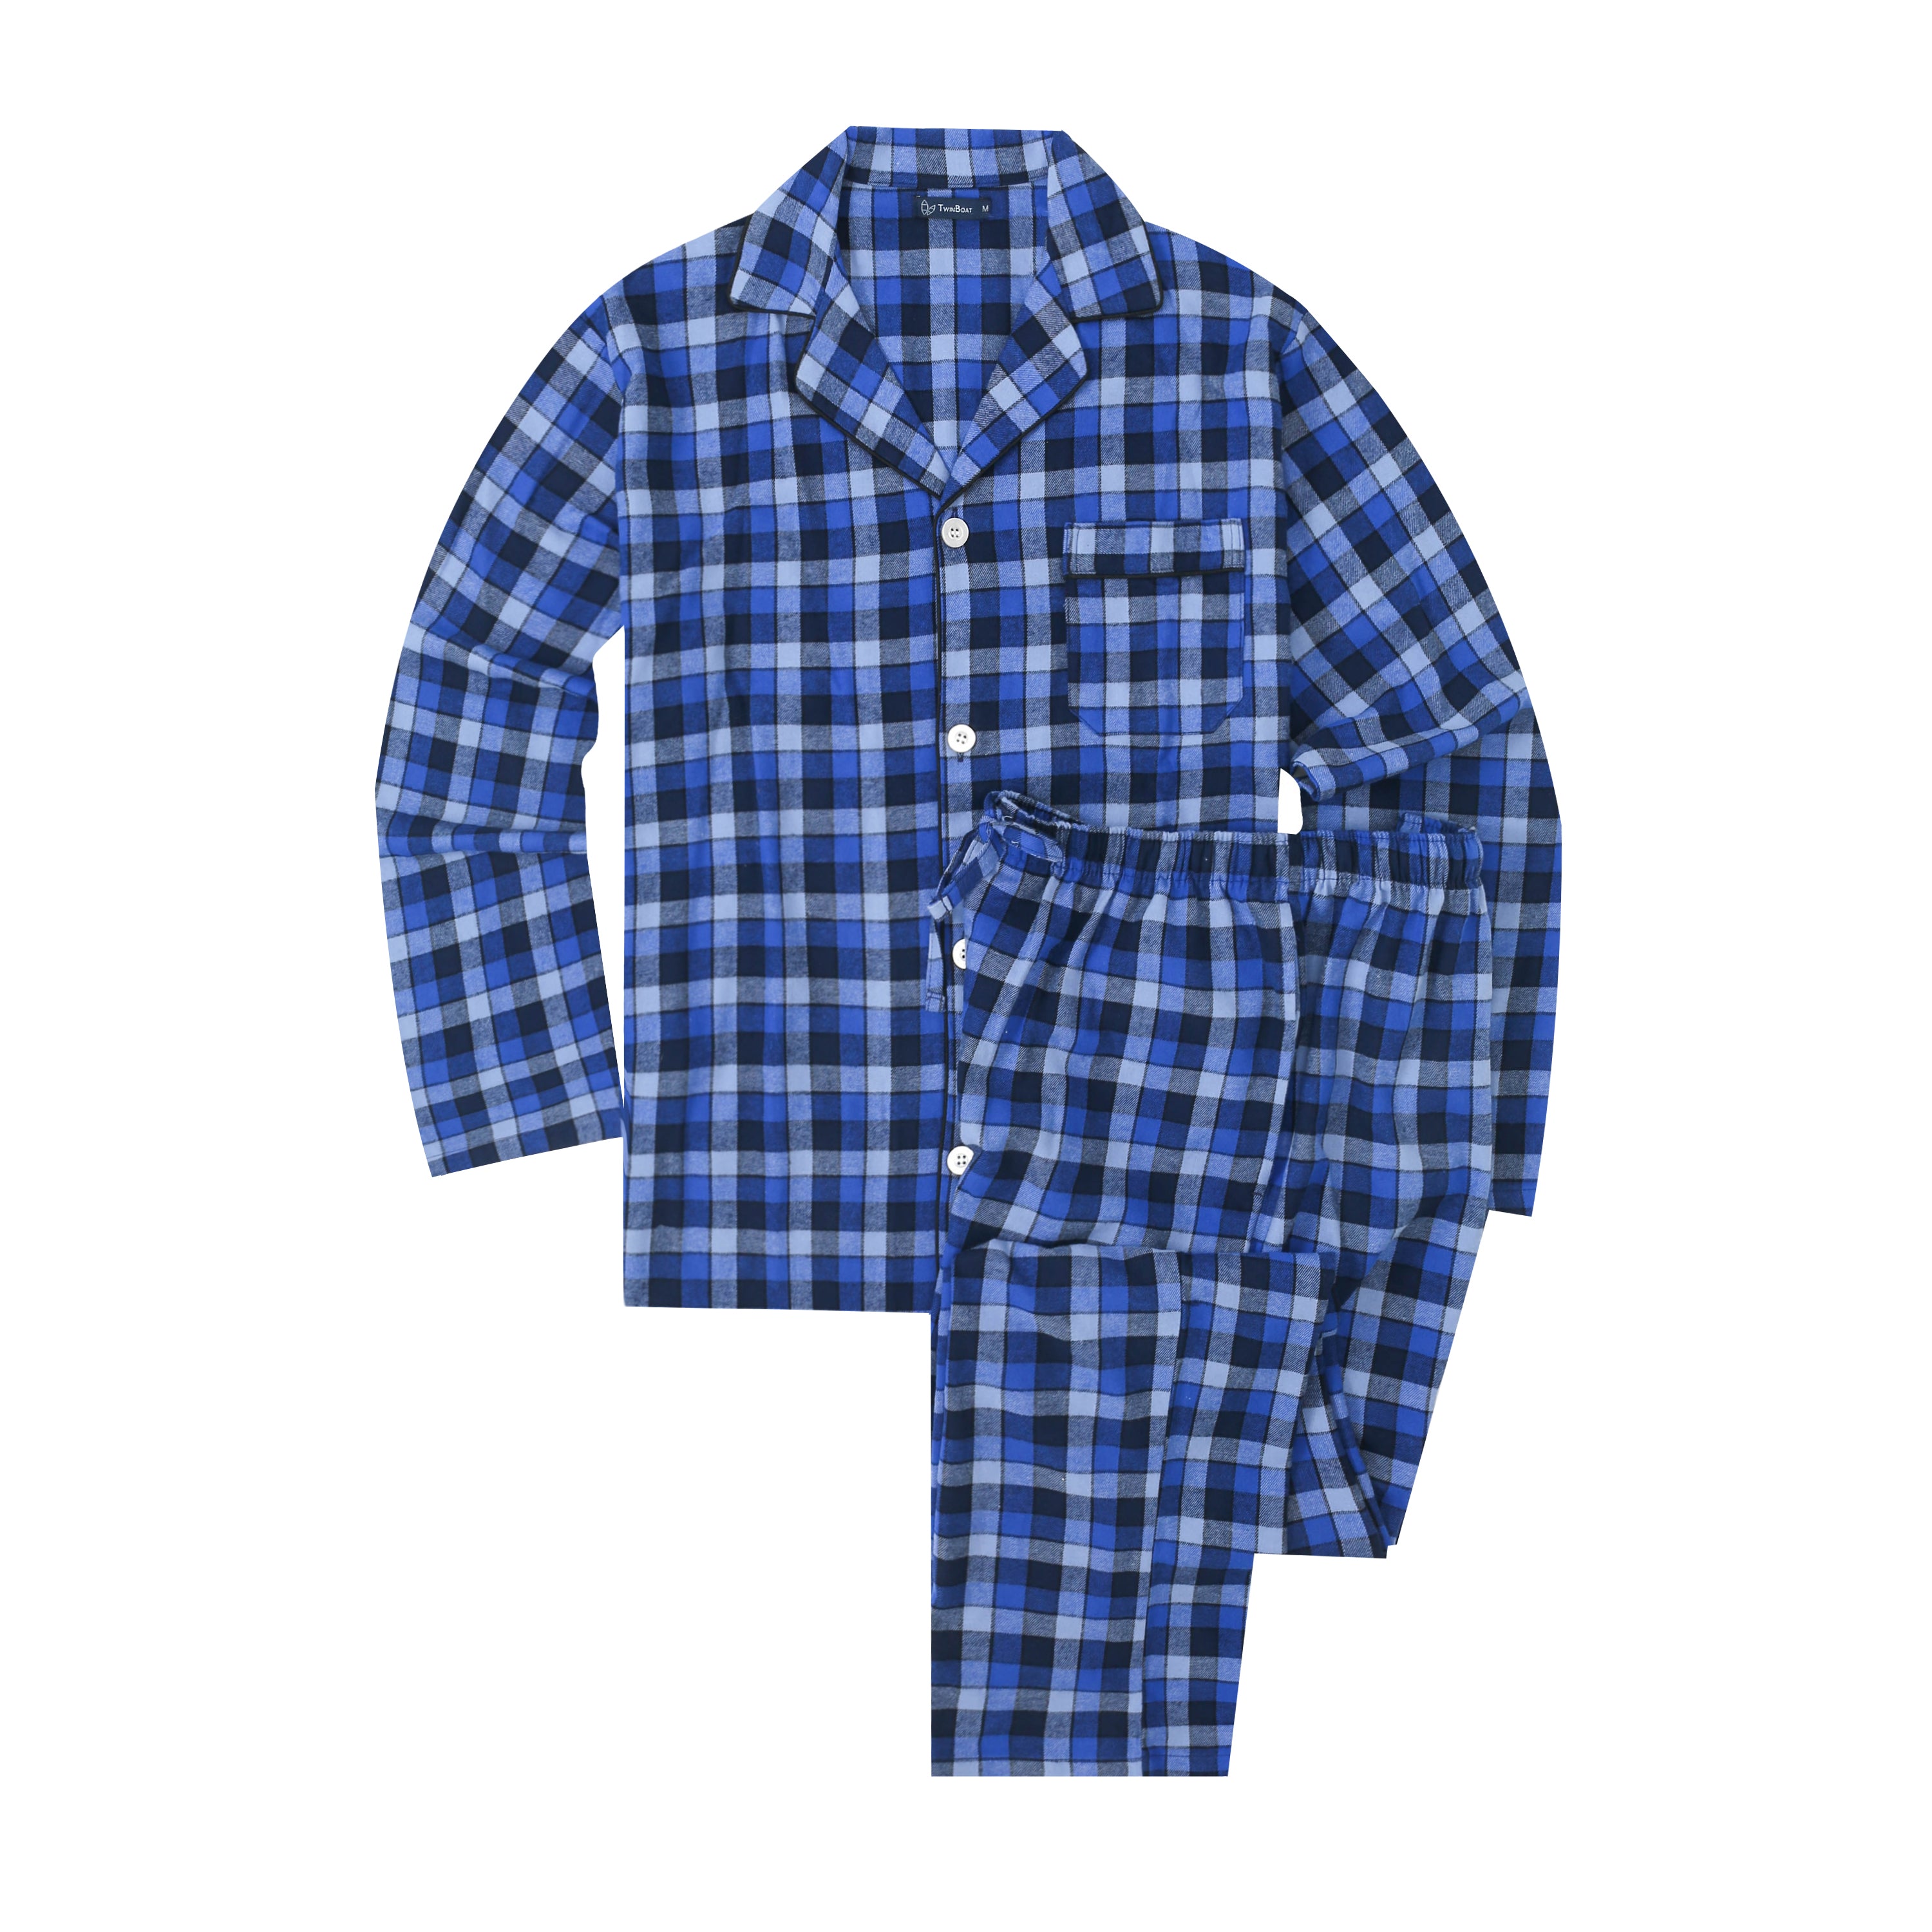 Mens Pajamas Set - 100% Cotton Flannel Pajamas for Men - Gradient Plaid Navy-Blue